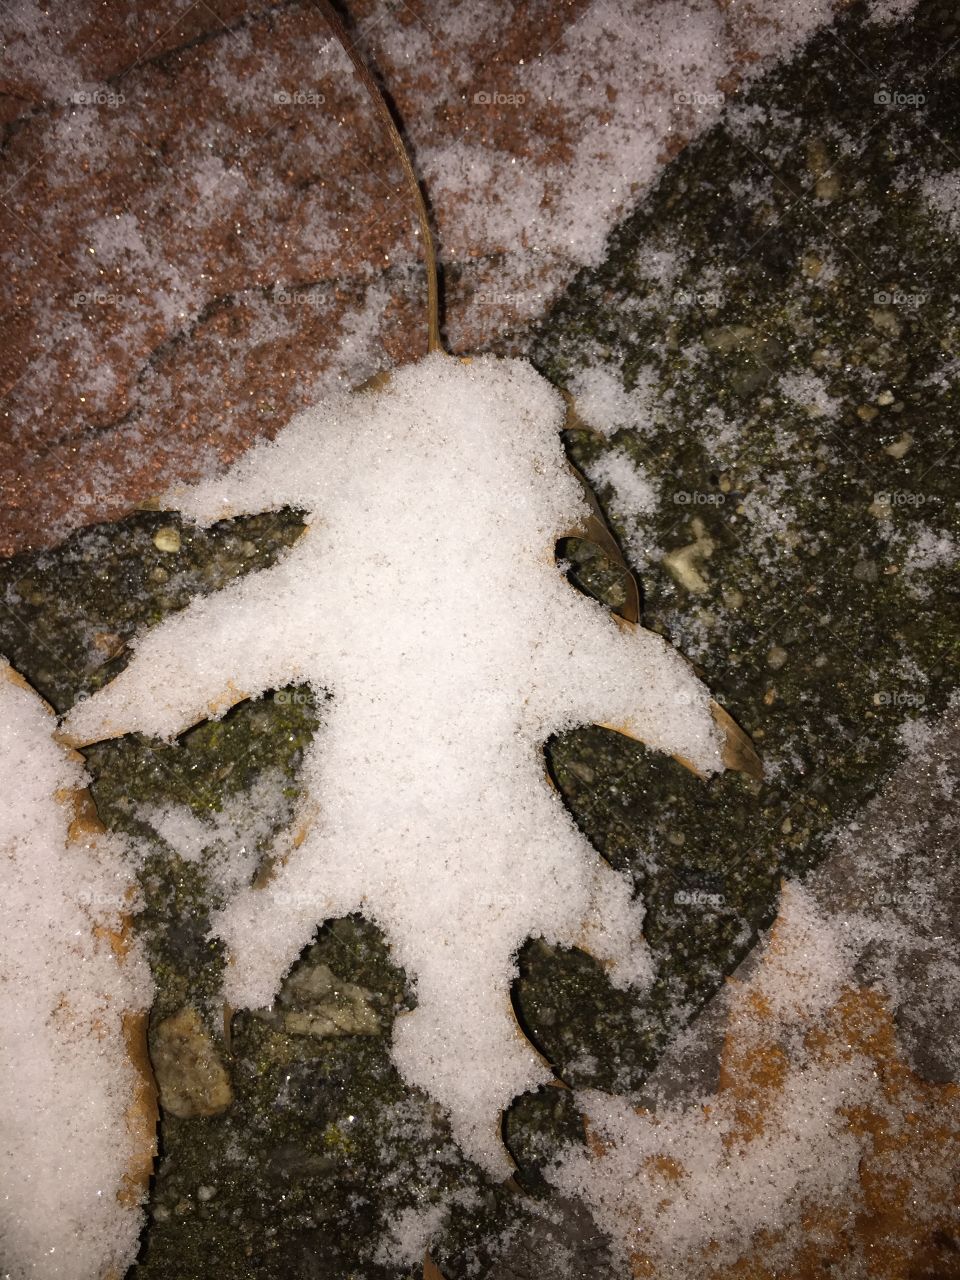 Snow ice leaf= perfection 